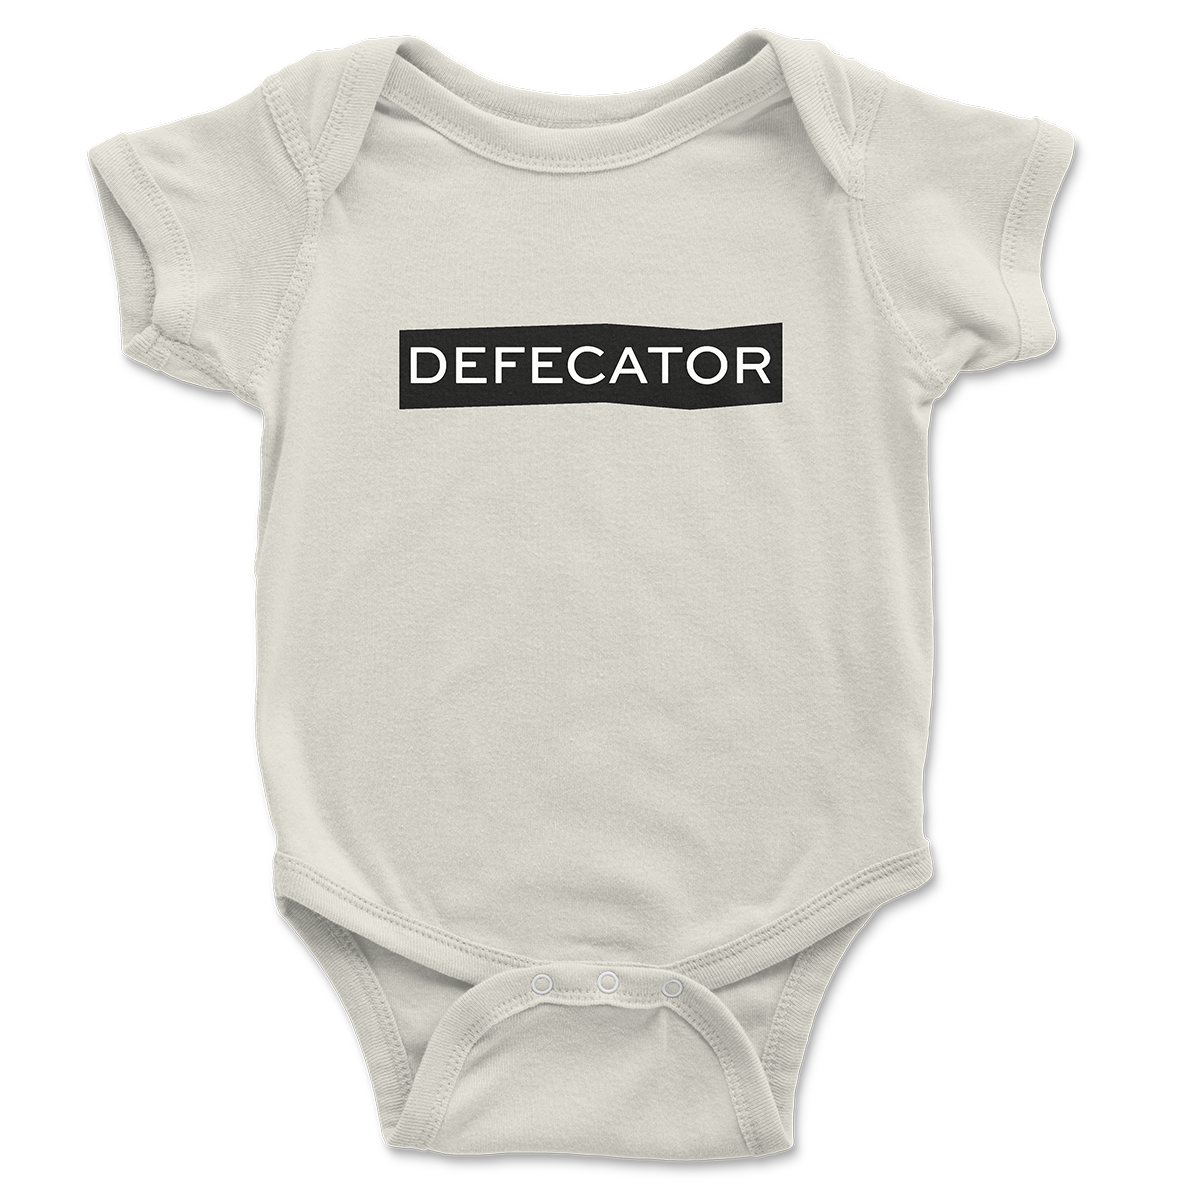 Defecator Baby One-Piece